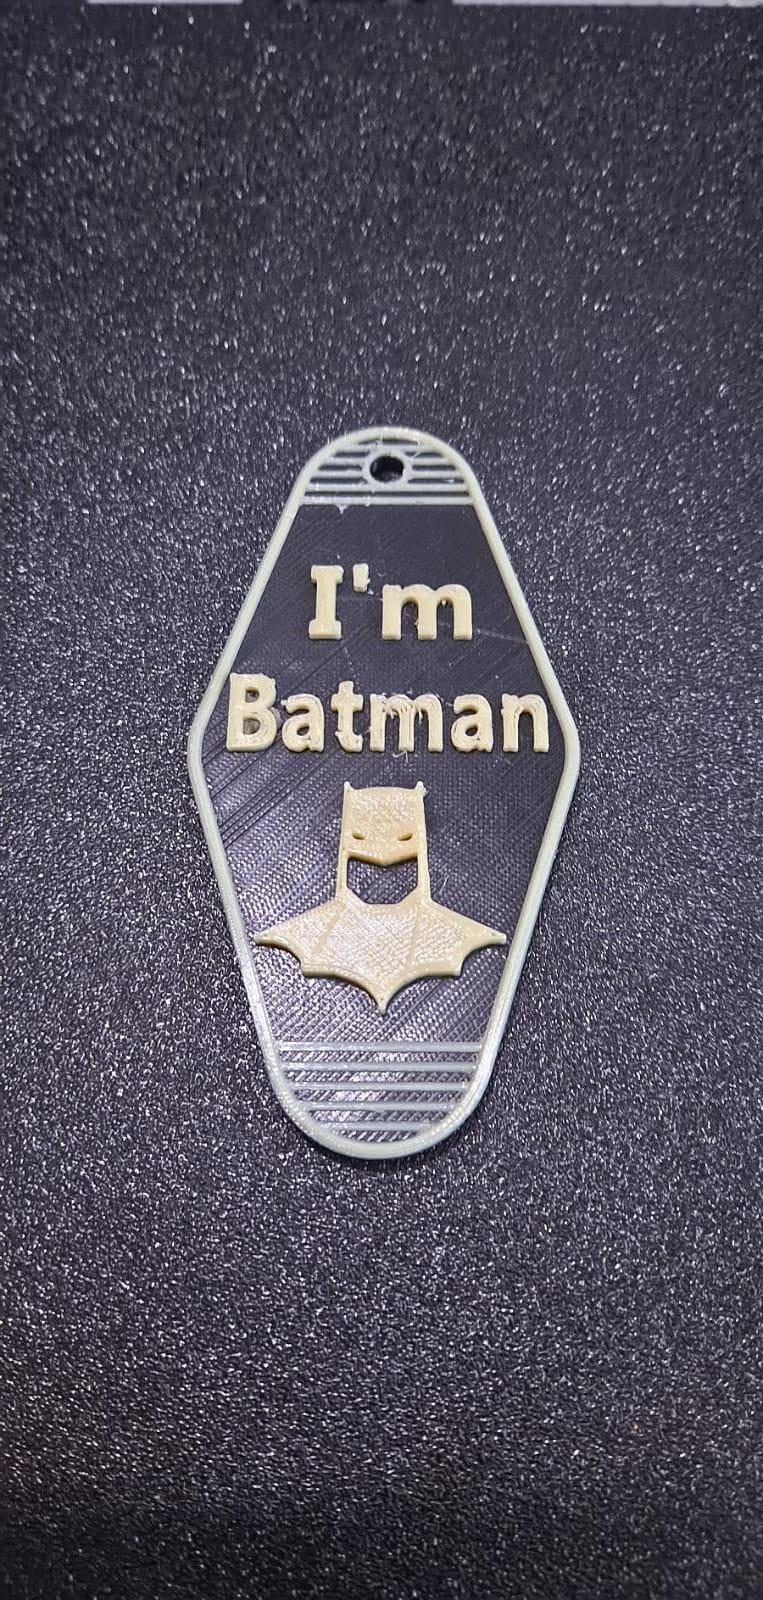 I'm Batman keychain 3d model